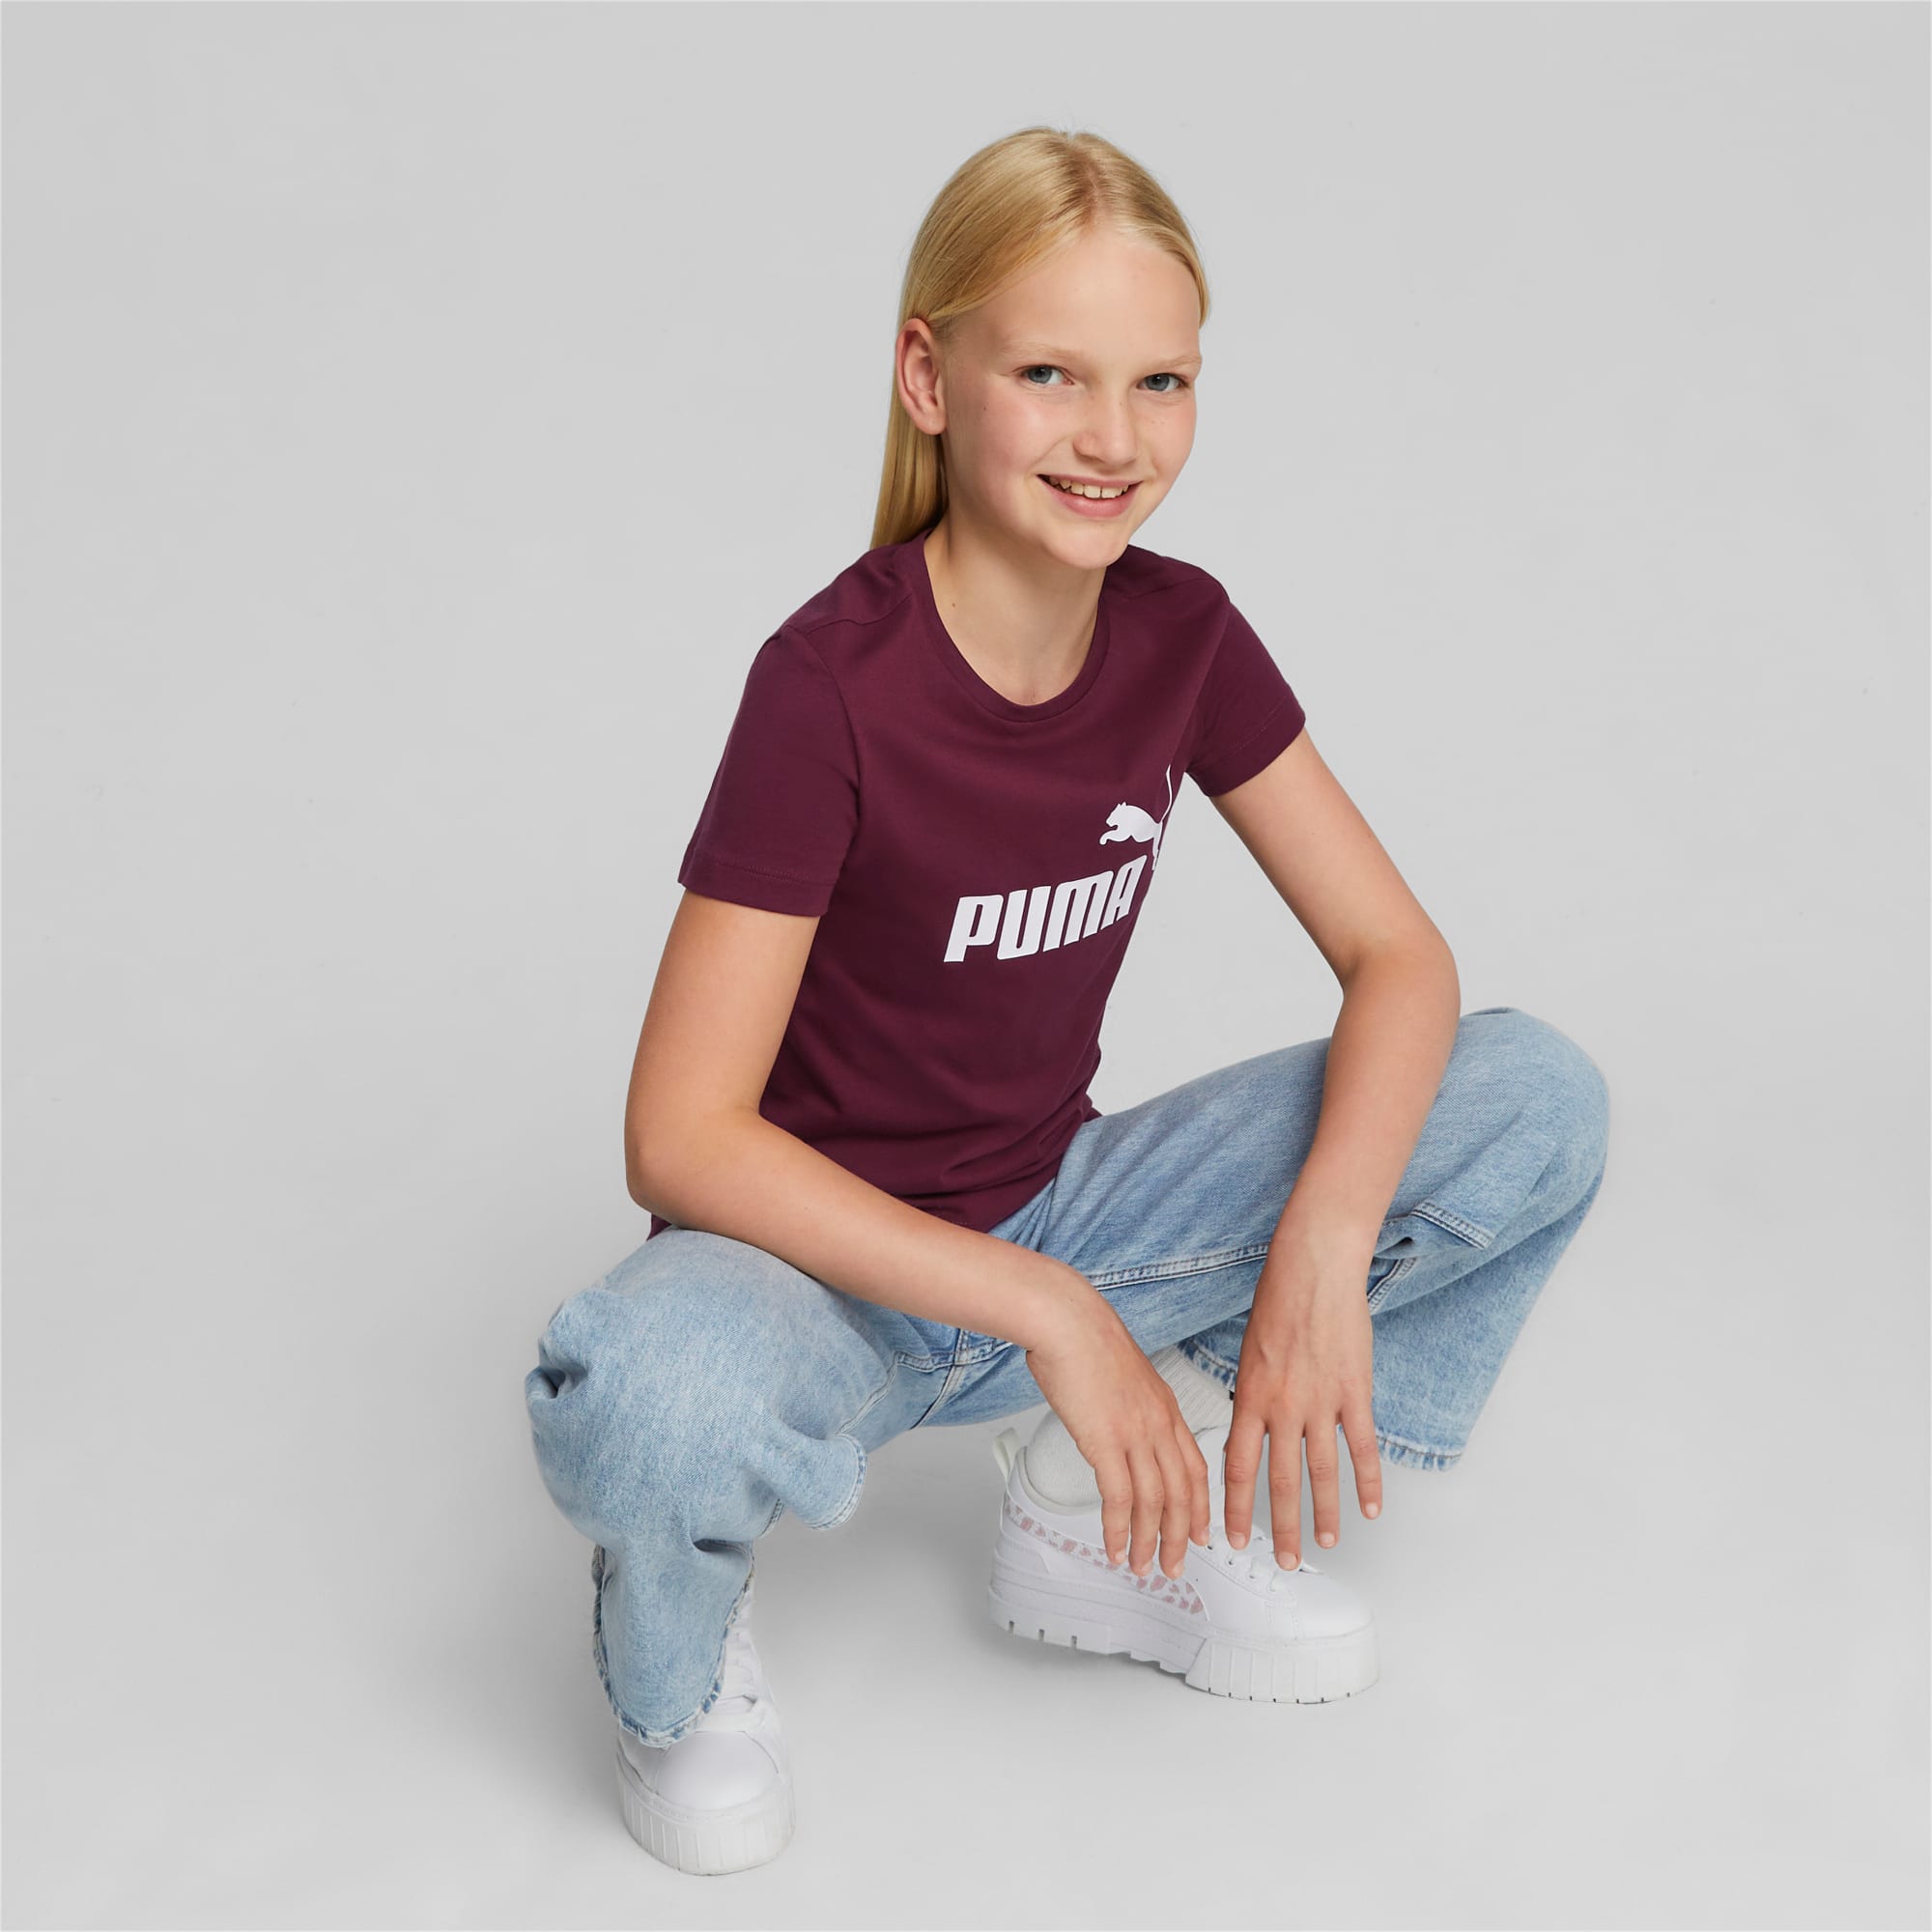 PUMA Essentials Logo Youth T-Shirt, Dark Jasper, Size 92, Clothing